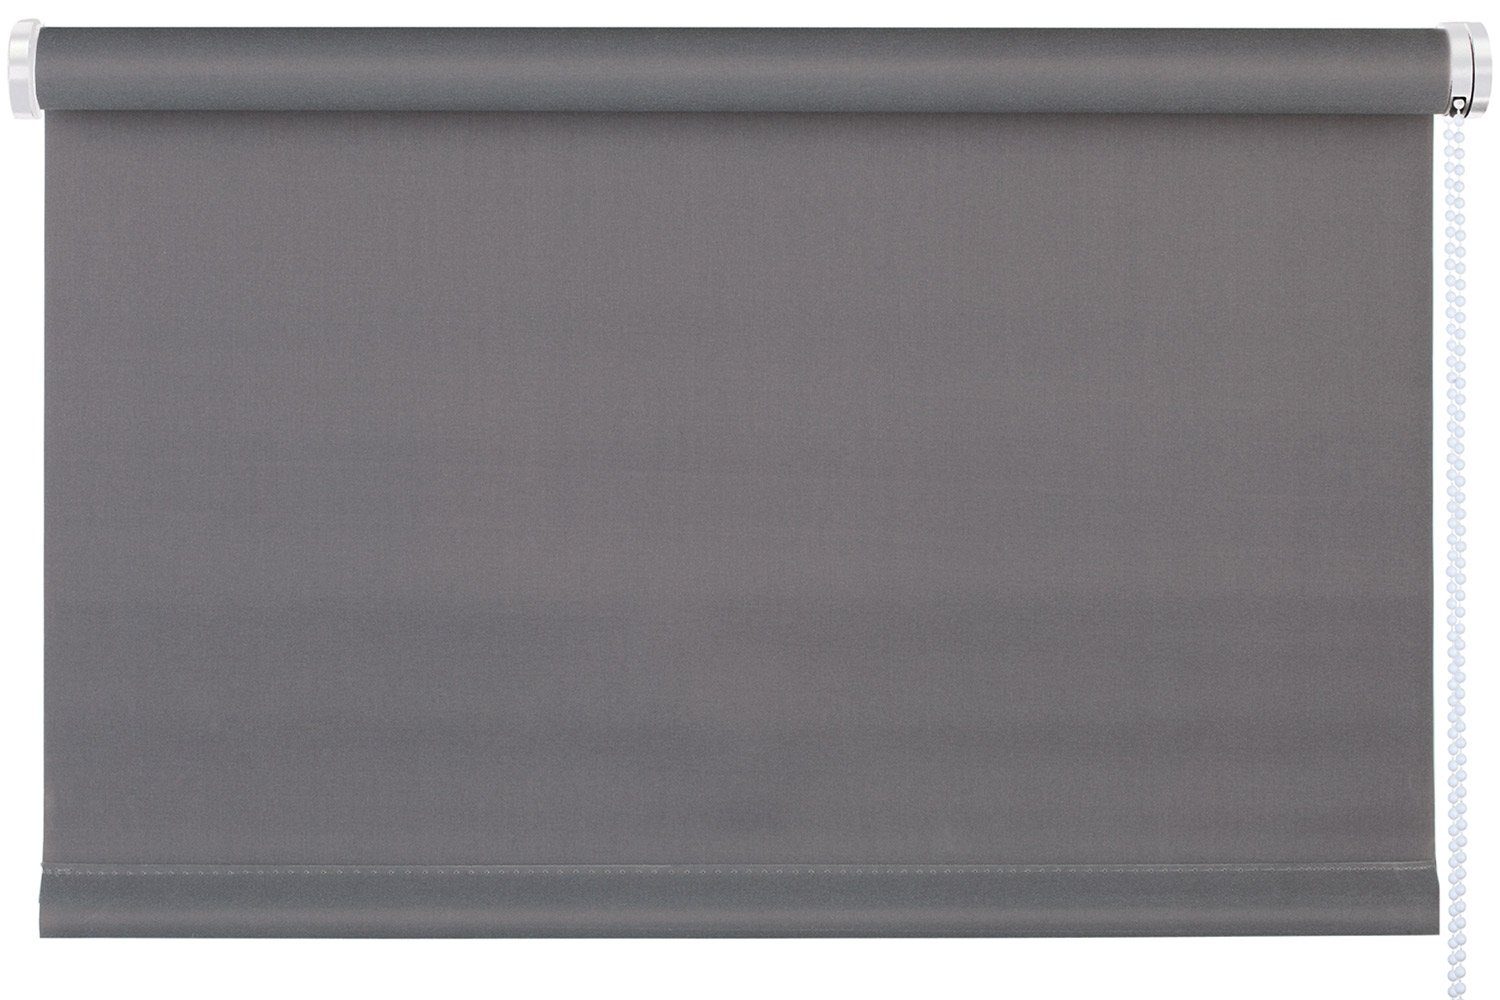 Rollo TREND, Design Rollo, Grau, B 60 x H 150 cm, mydeco, blickdicht, ohne  Bohren, Klemmfix | Springrollos